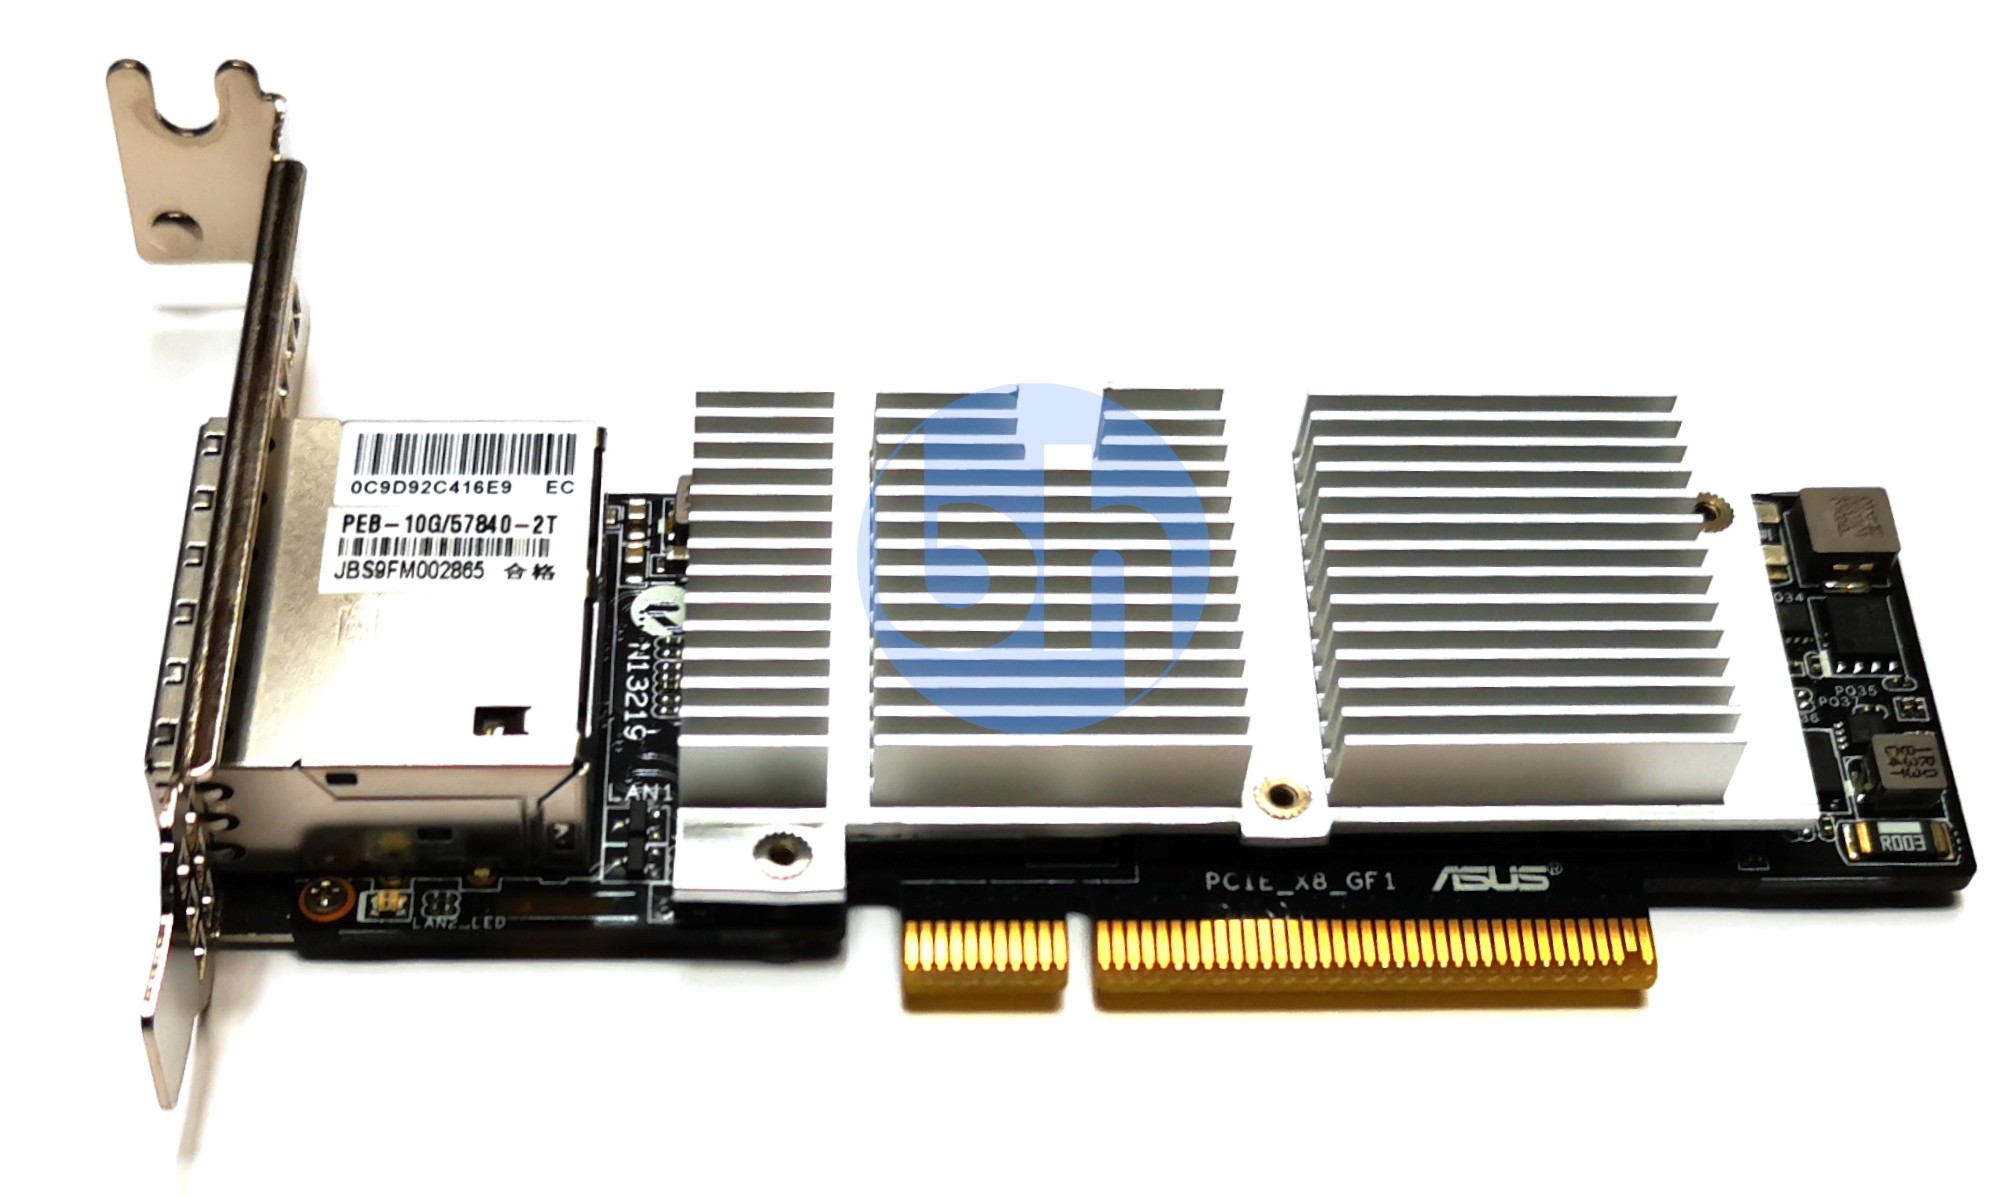 Asus PEB-10G/57840-2T Dual Port RJ-45 - 10GbE Low Profile PCIe-x8 NIC Card